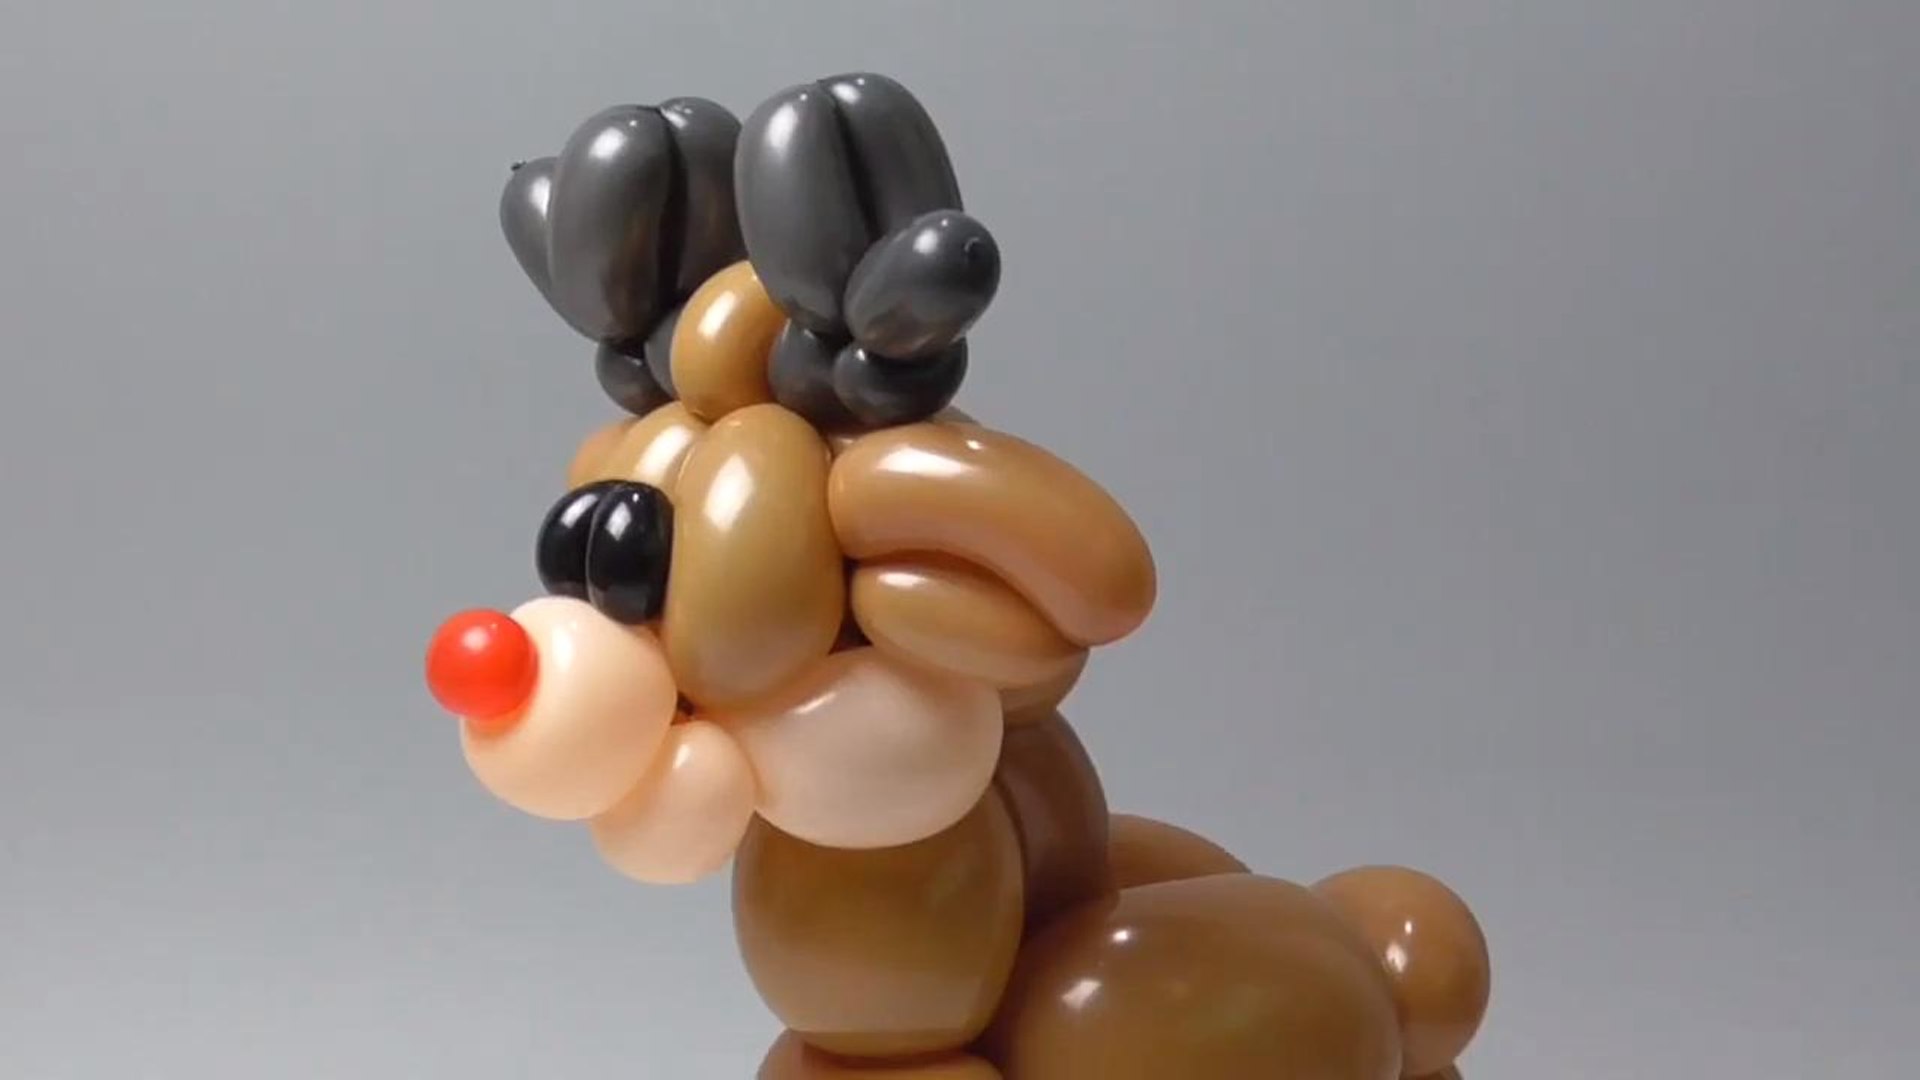 Person Makes Reindeer Balloon Sculpture